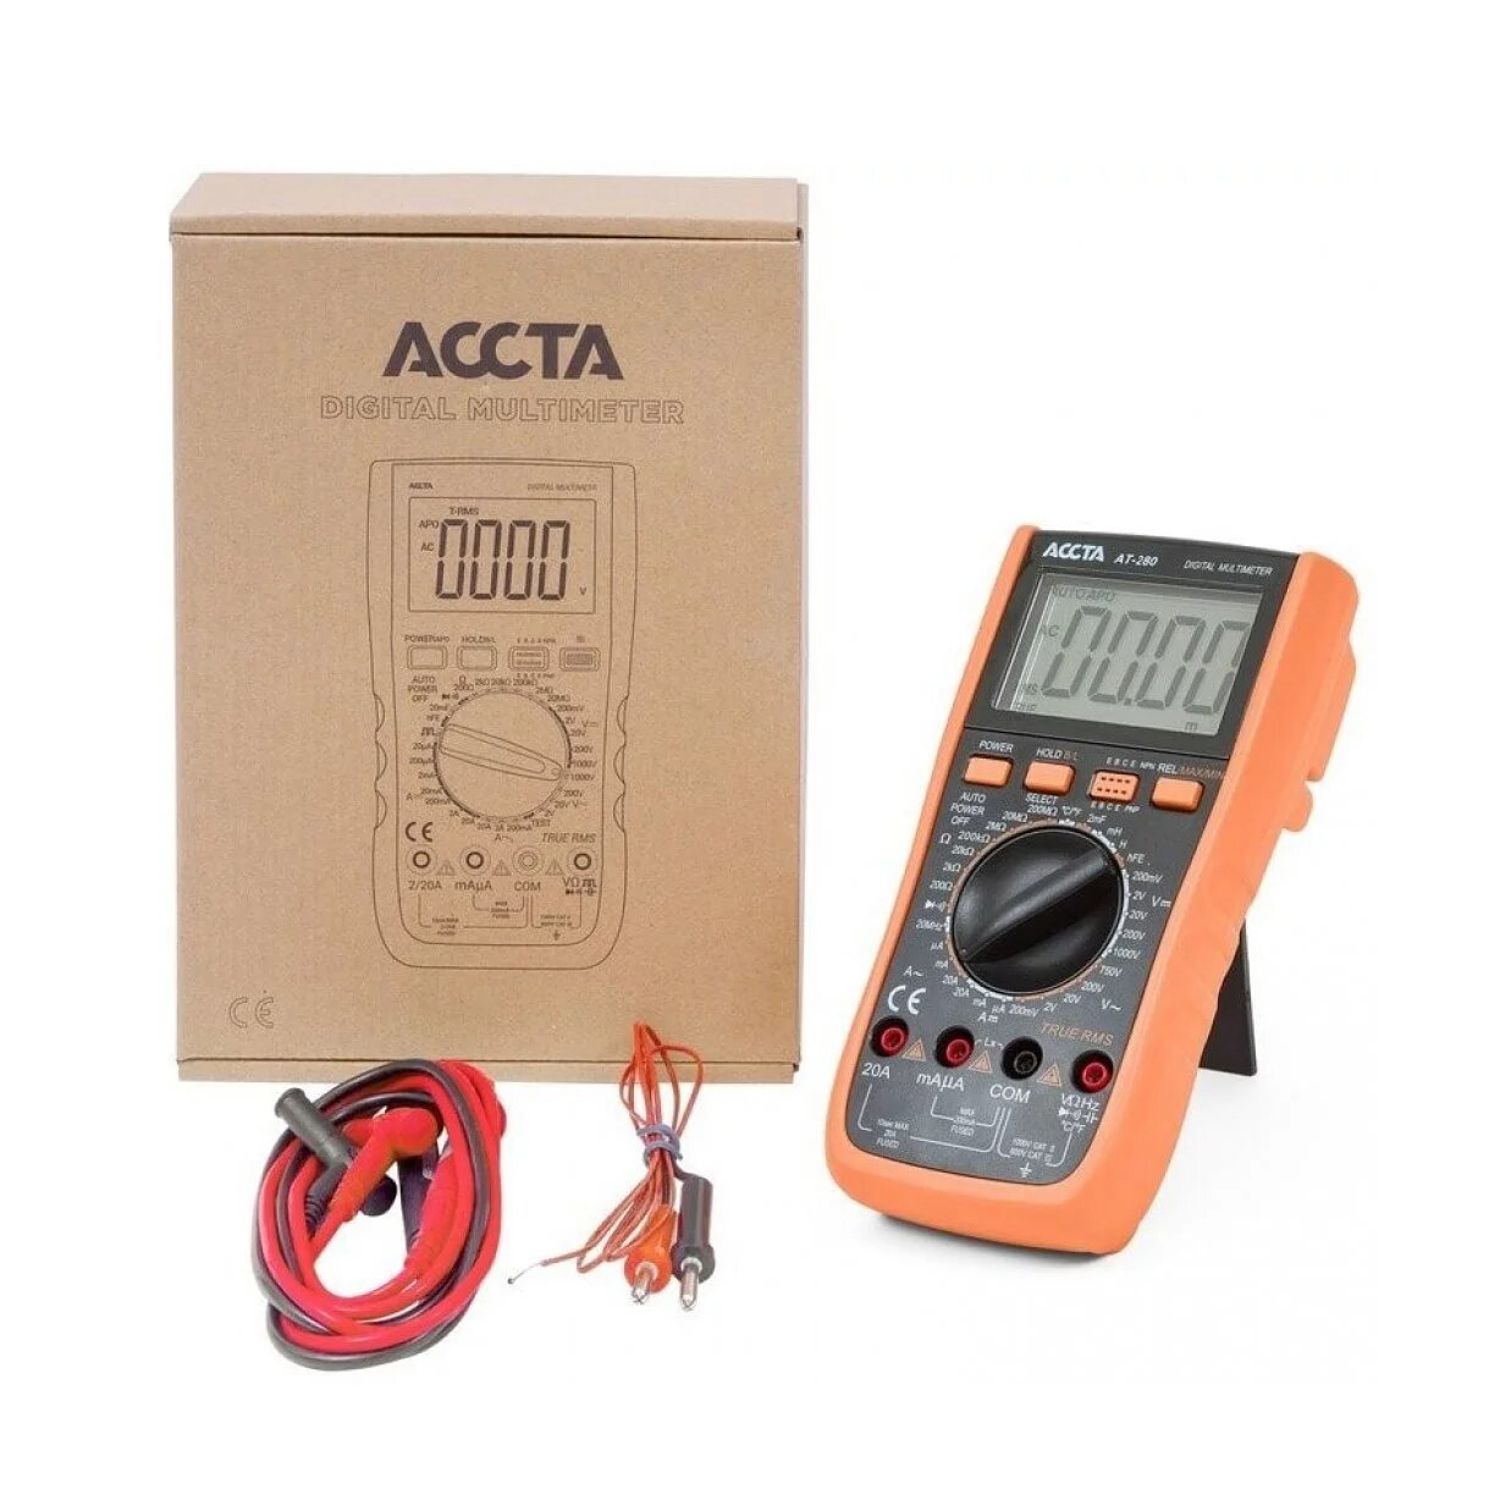 Цифровой мультиметр ACCTA AT-280